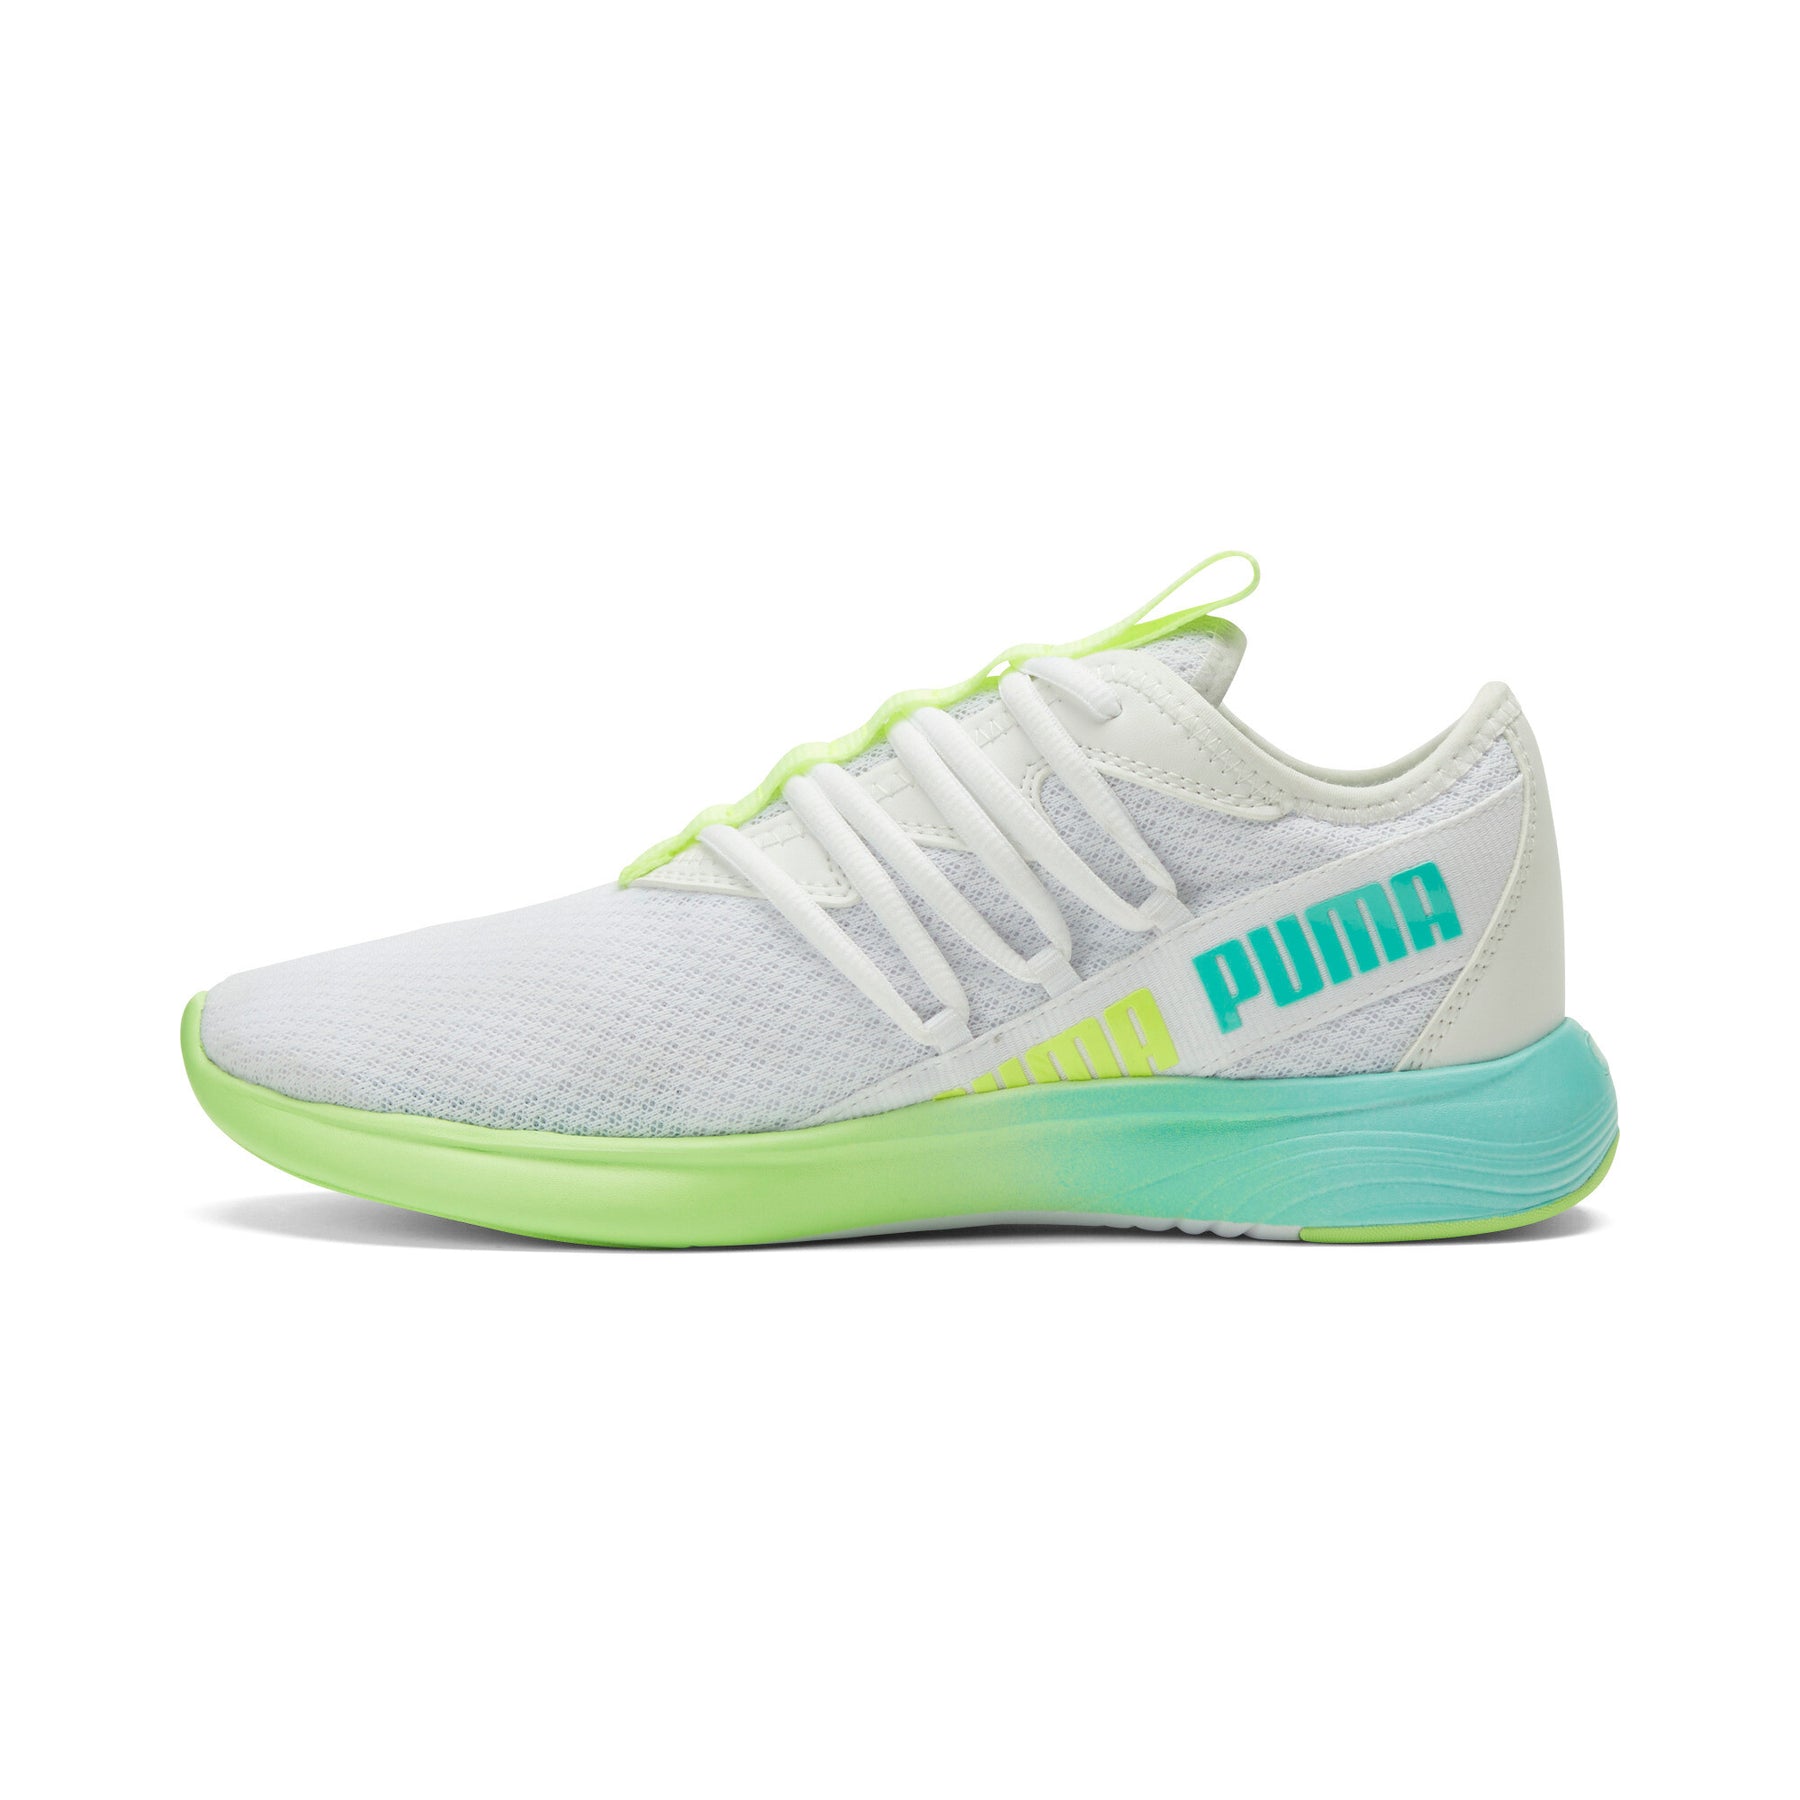 PUMA Women's Star Vital Fade Running Shoes (White) $35 + Free Shipping